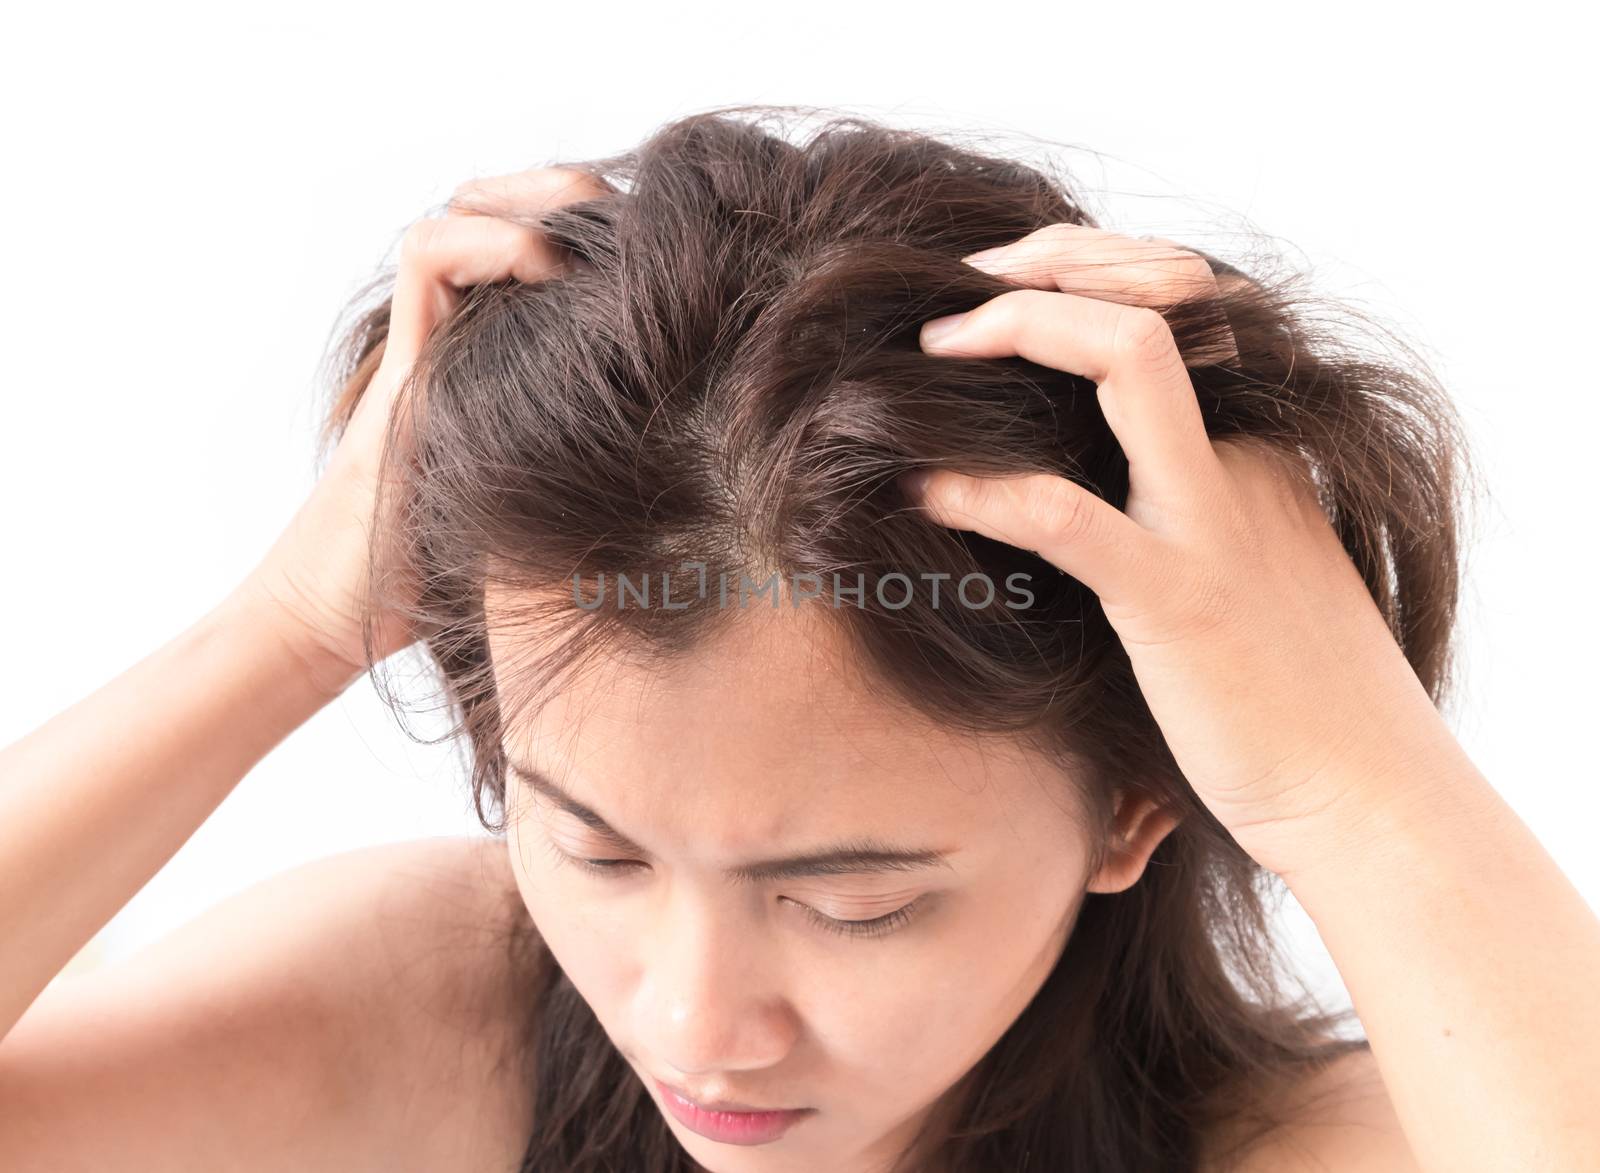 Closeup woman hand itchy scalp, Hair care concept by pt.pongsak@gmail.com